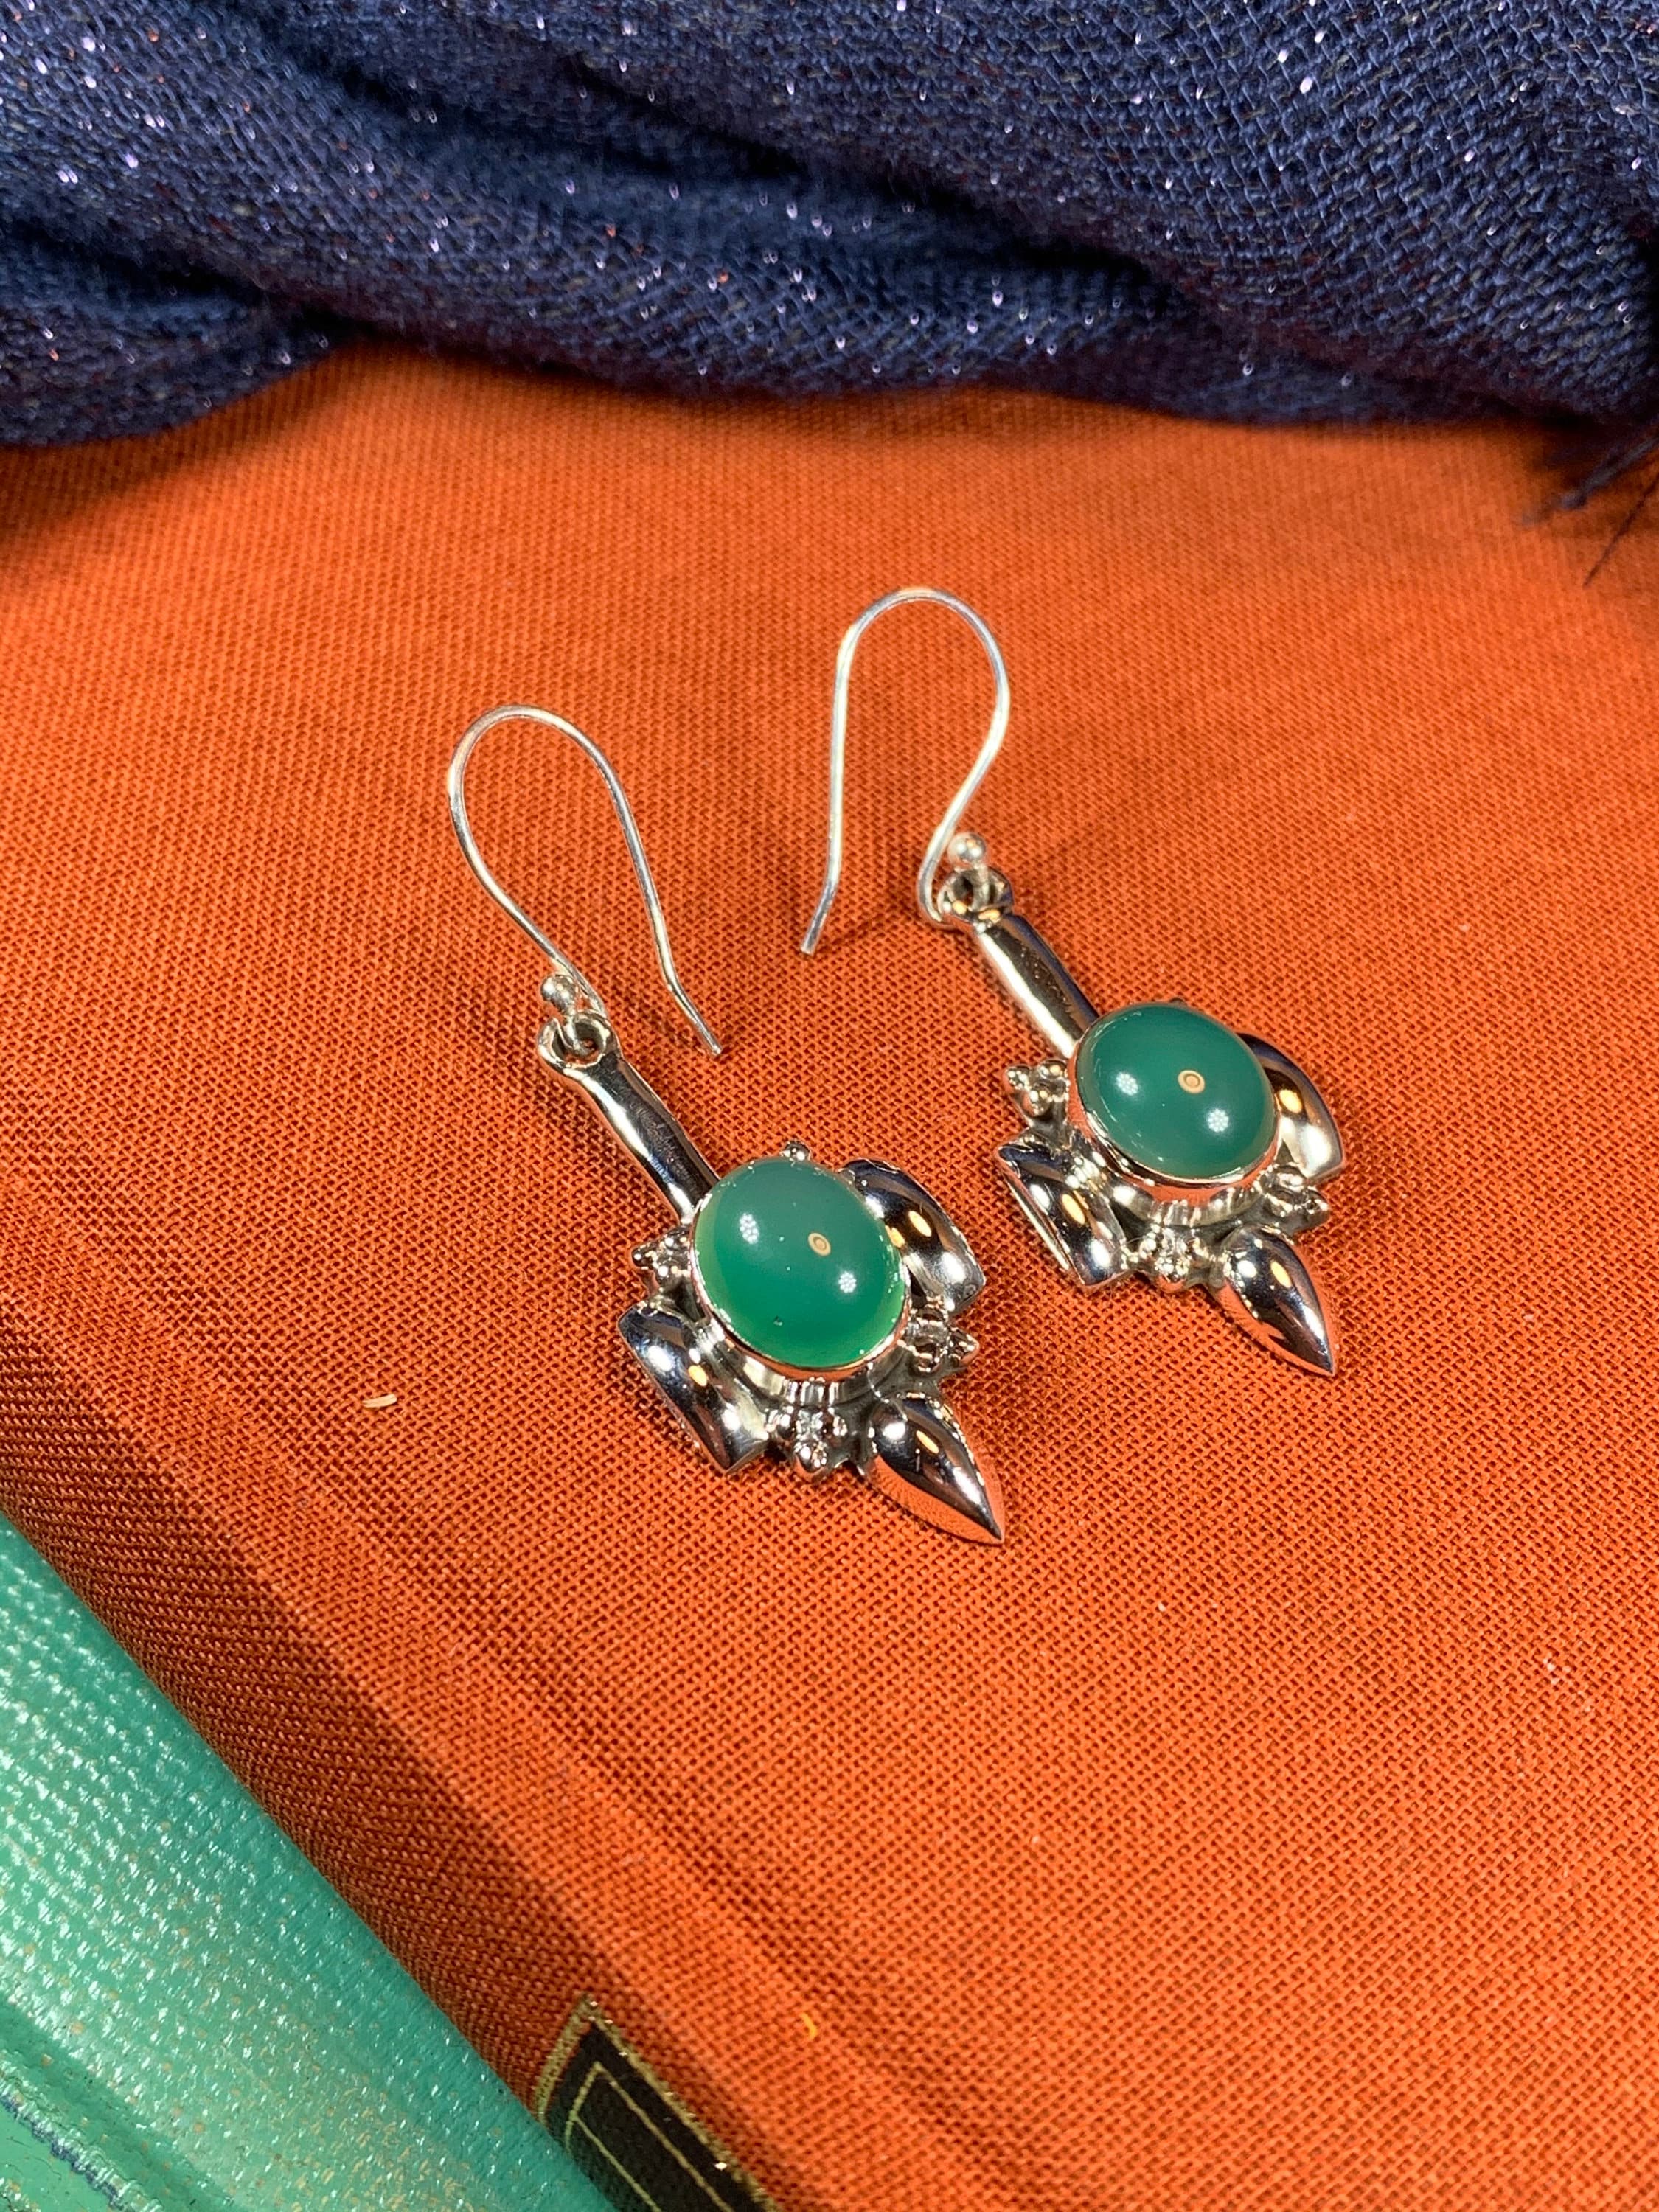 celtic earrings celtic jewelry irish jewelry celtic knot jewelry